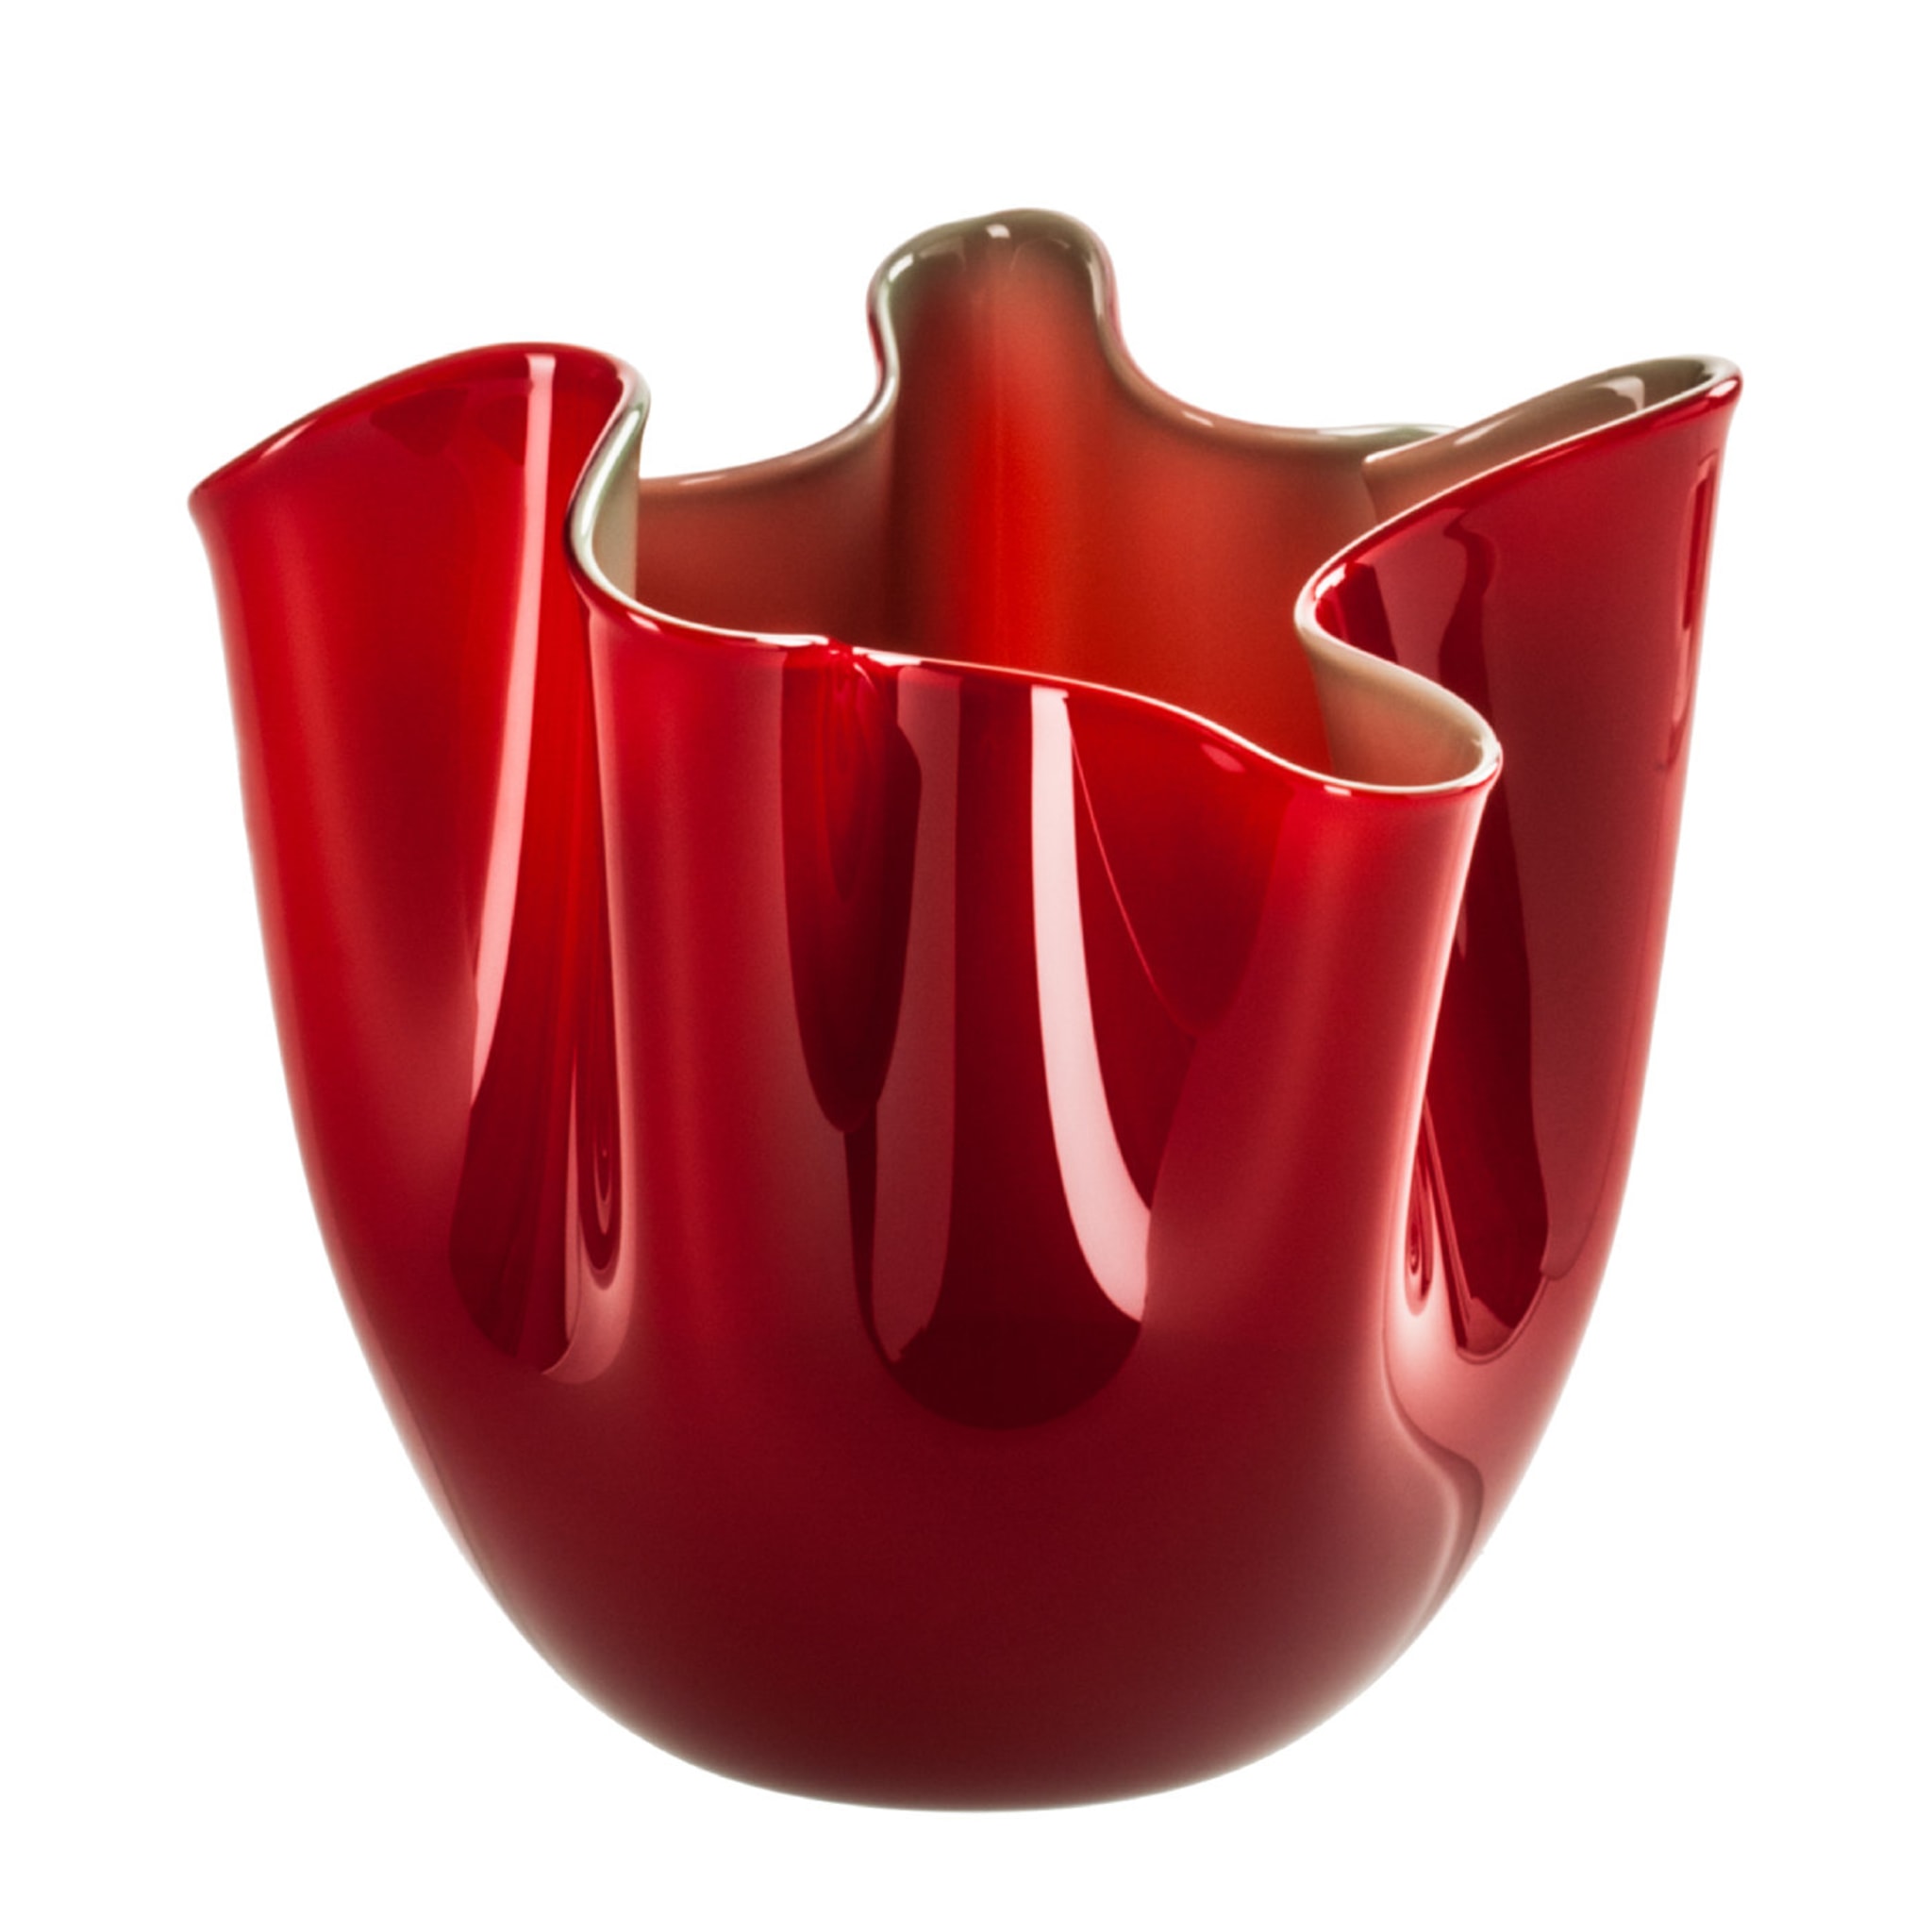 Fazzoletti Opalini Red Vase by Fulvio Bianconi # 2 - Main view